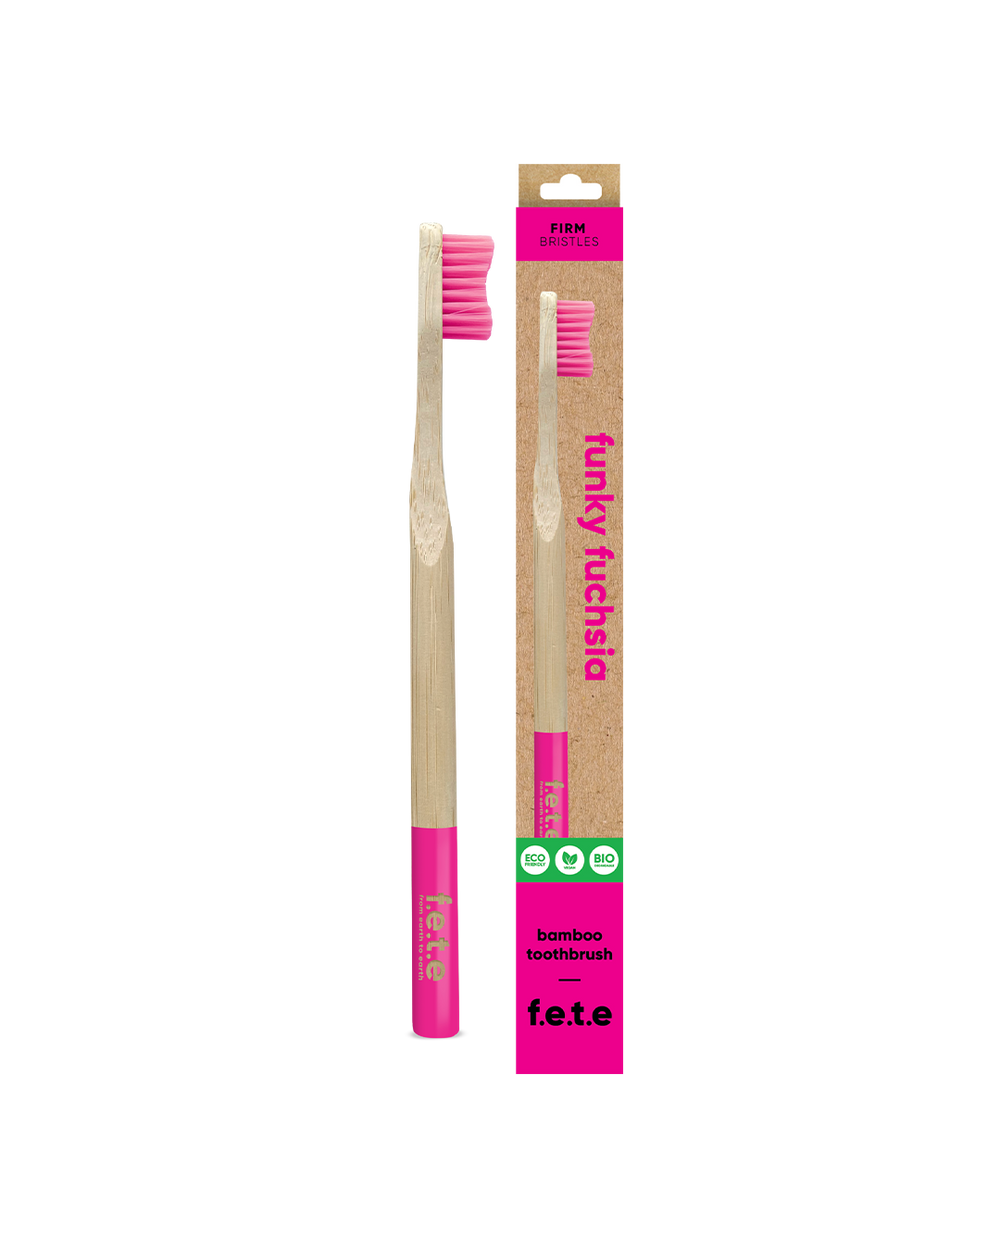 Bamboo toothbrush - hard fibers